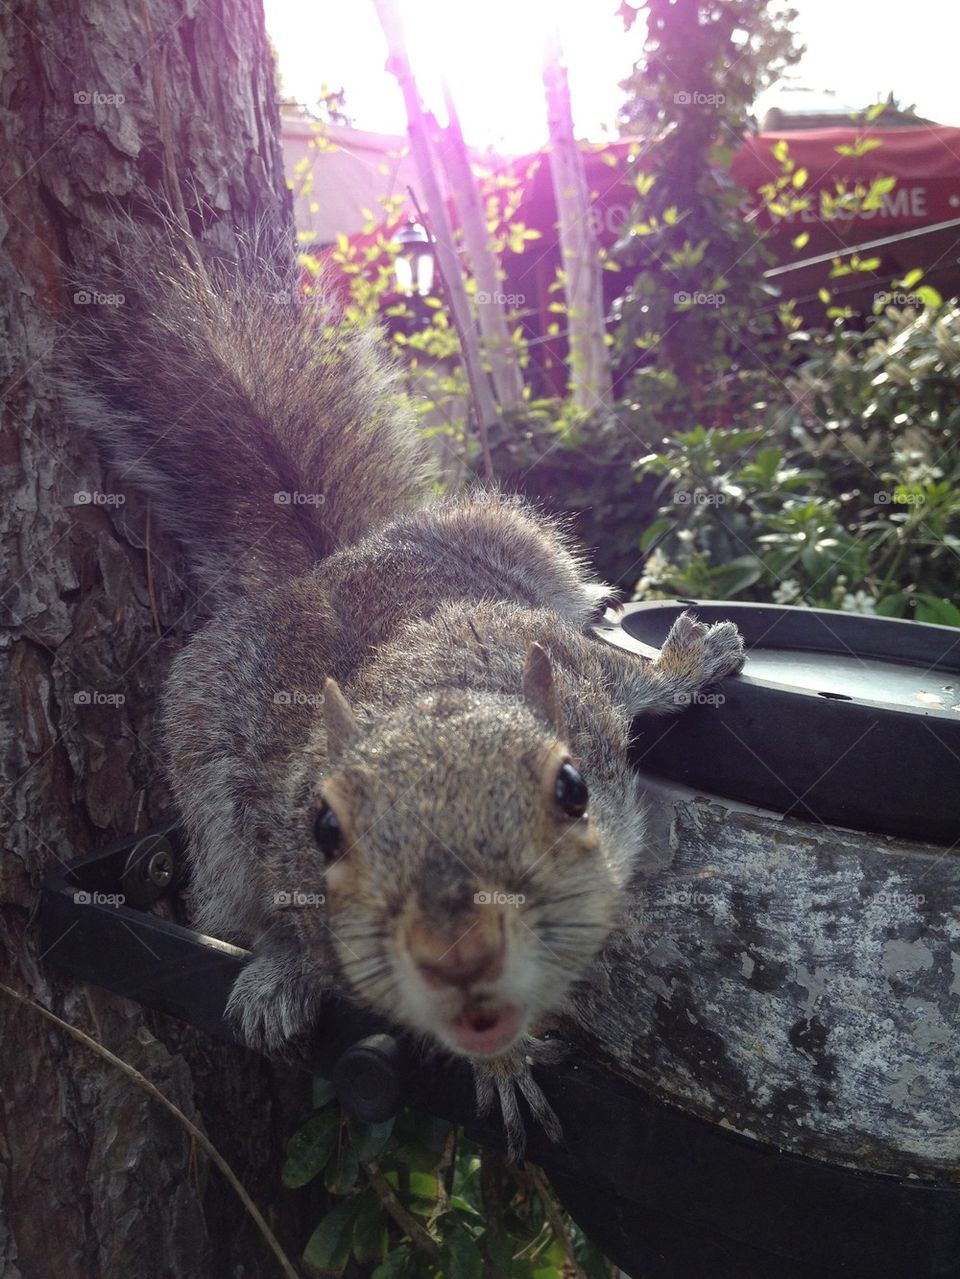 Squirrel saying hello